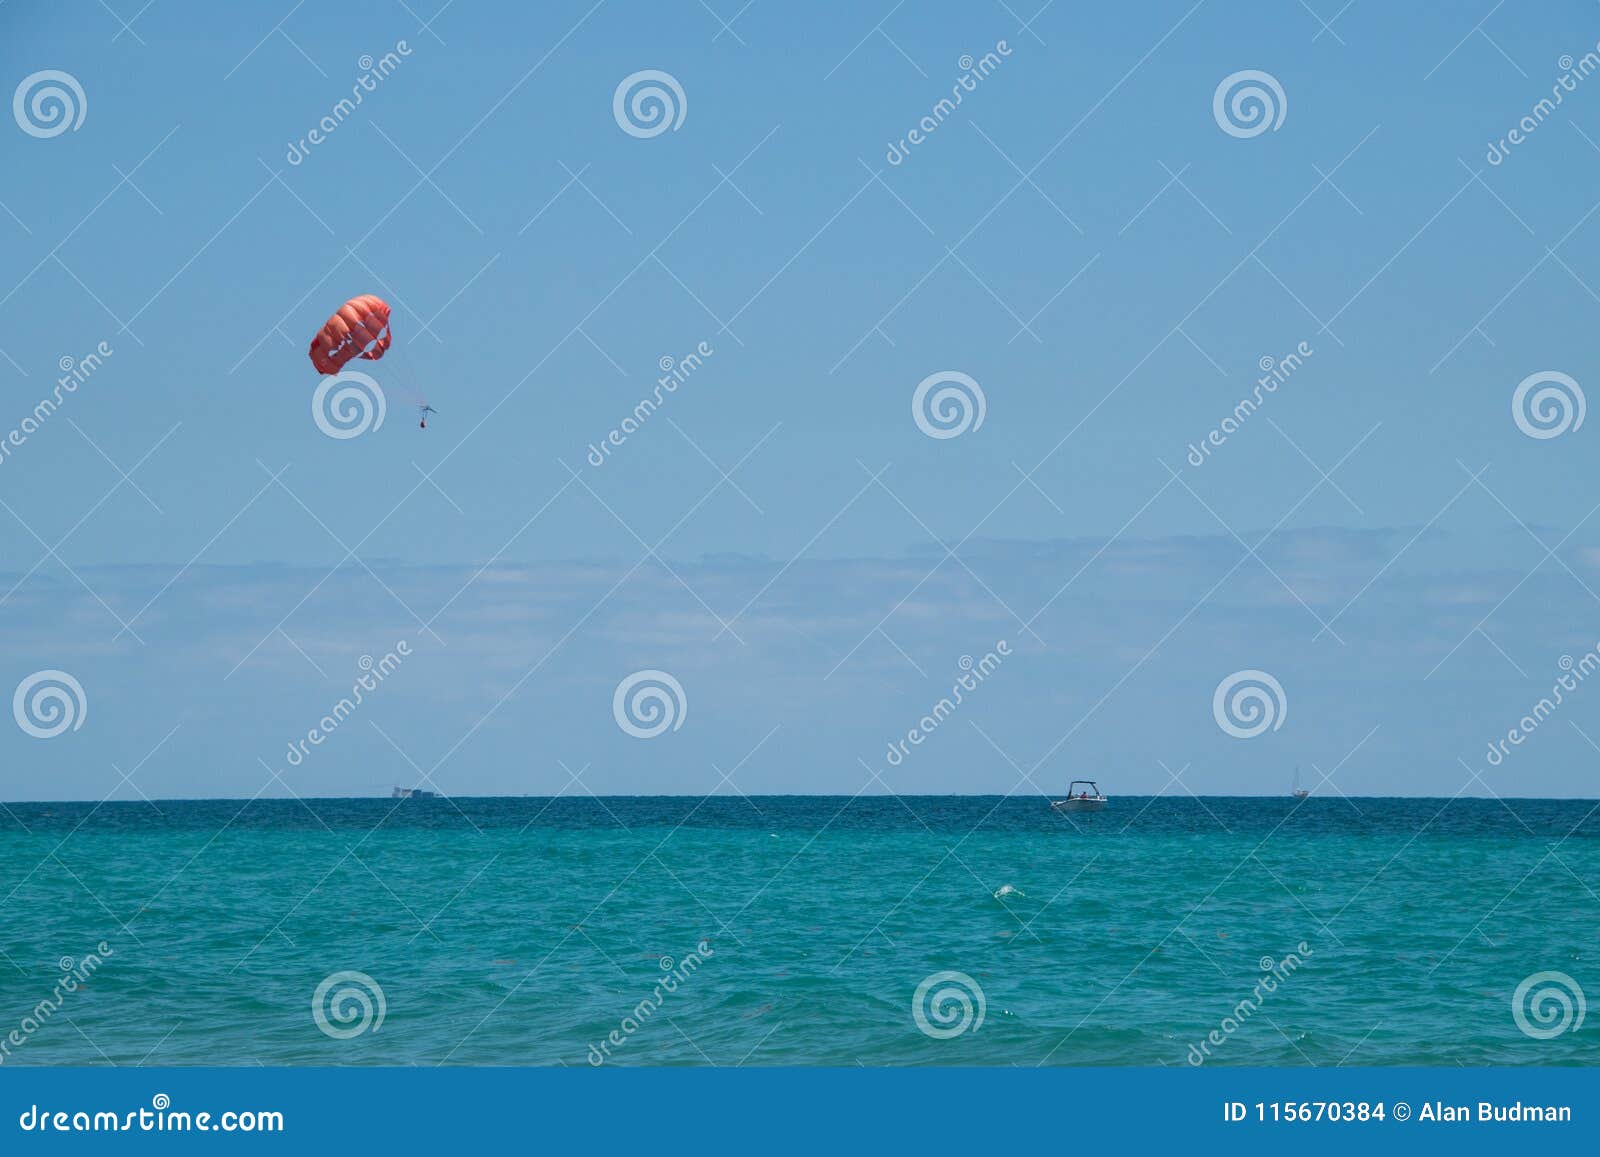 parasail on deep blue water